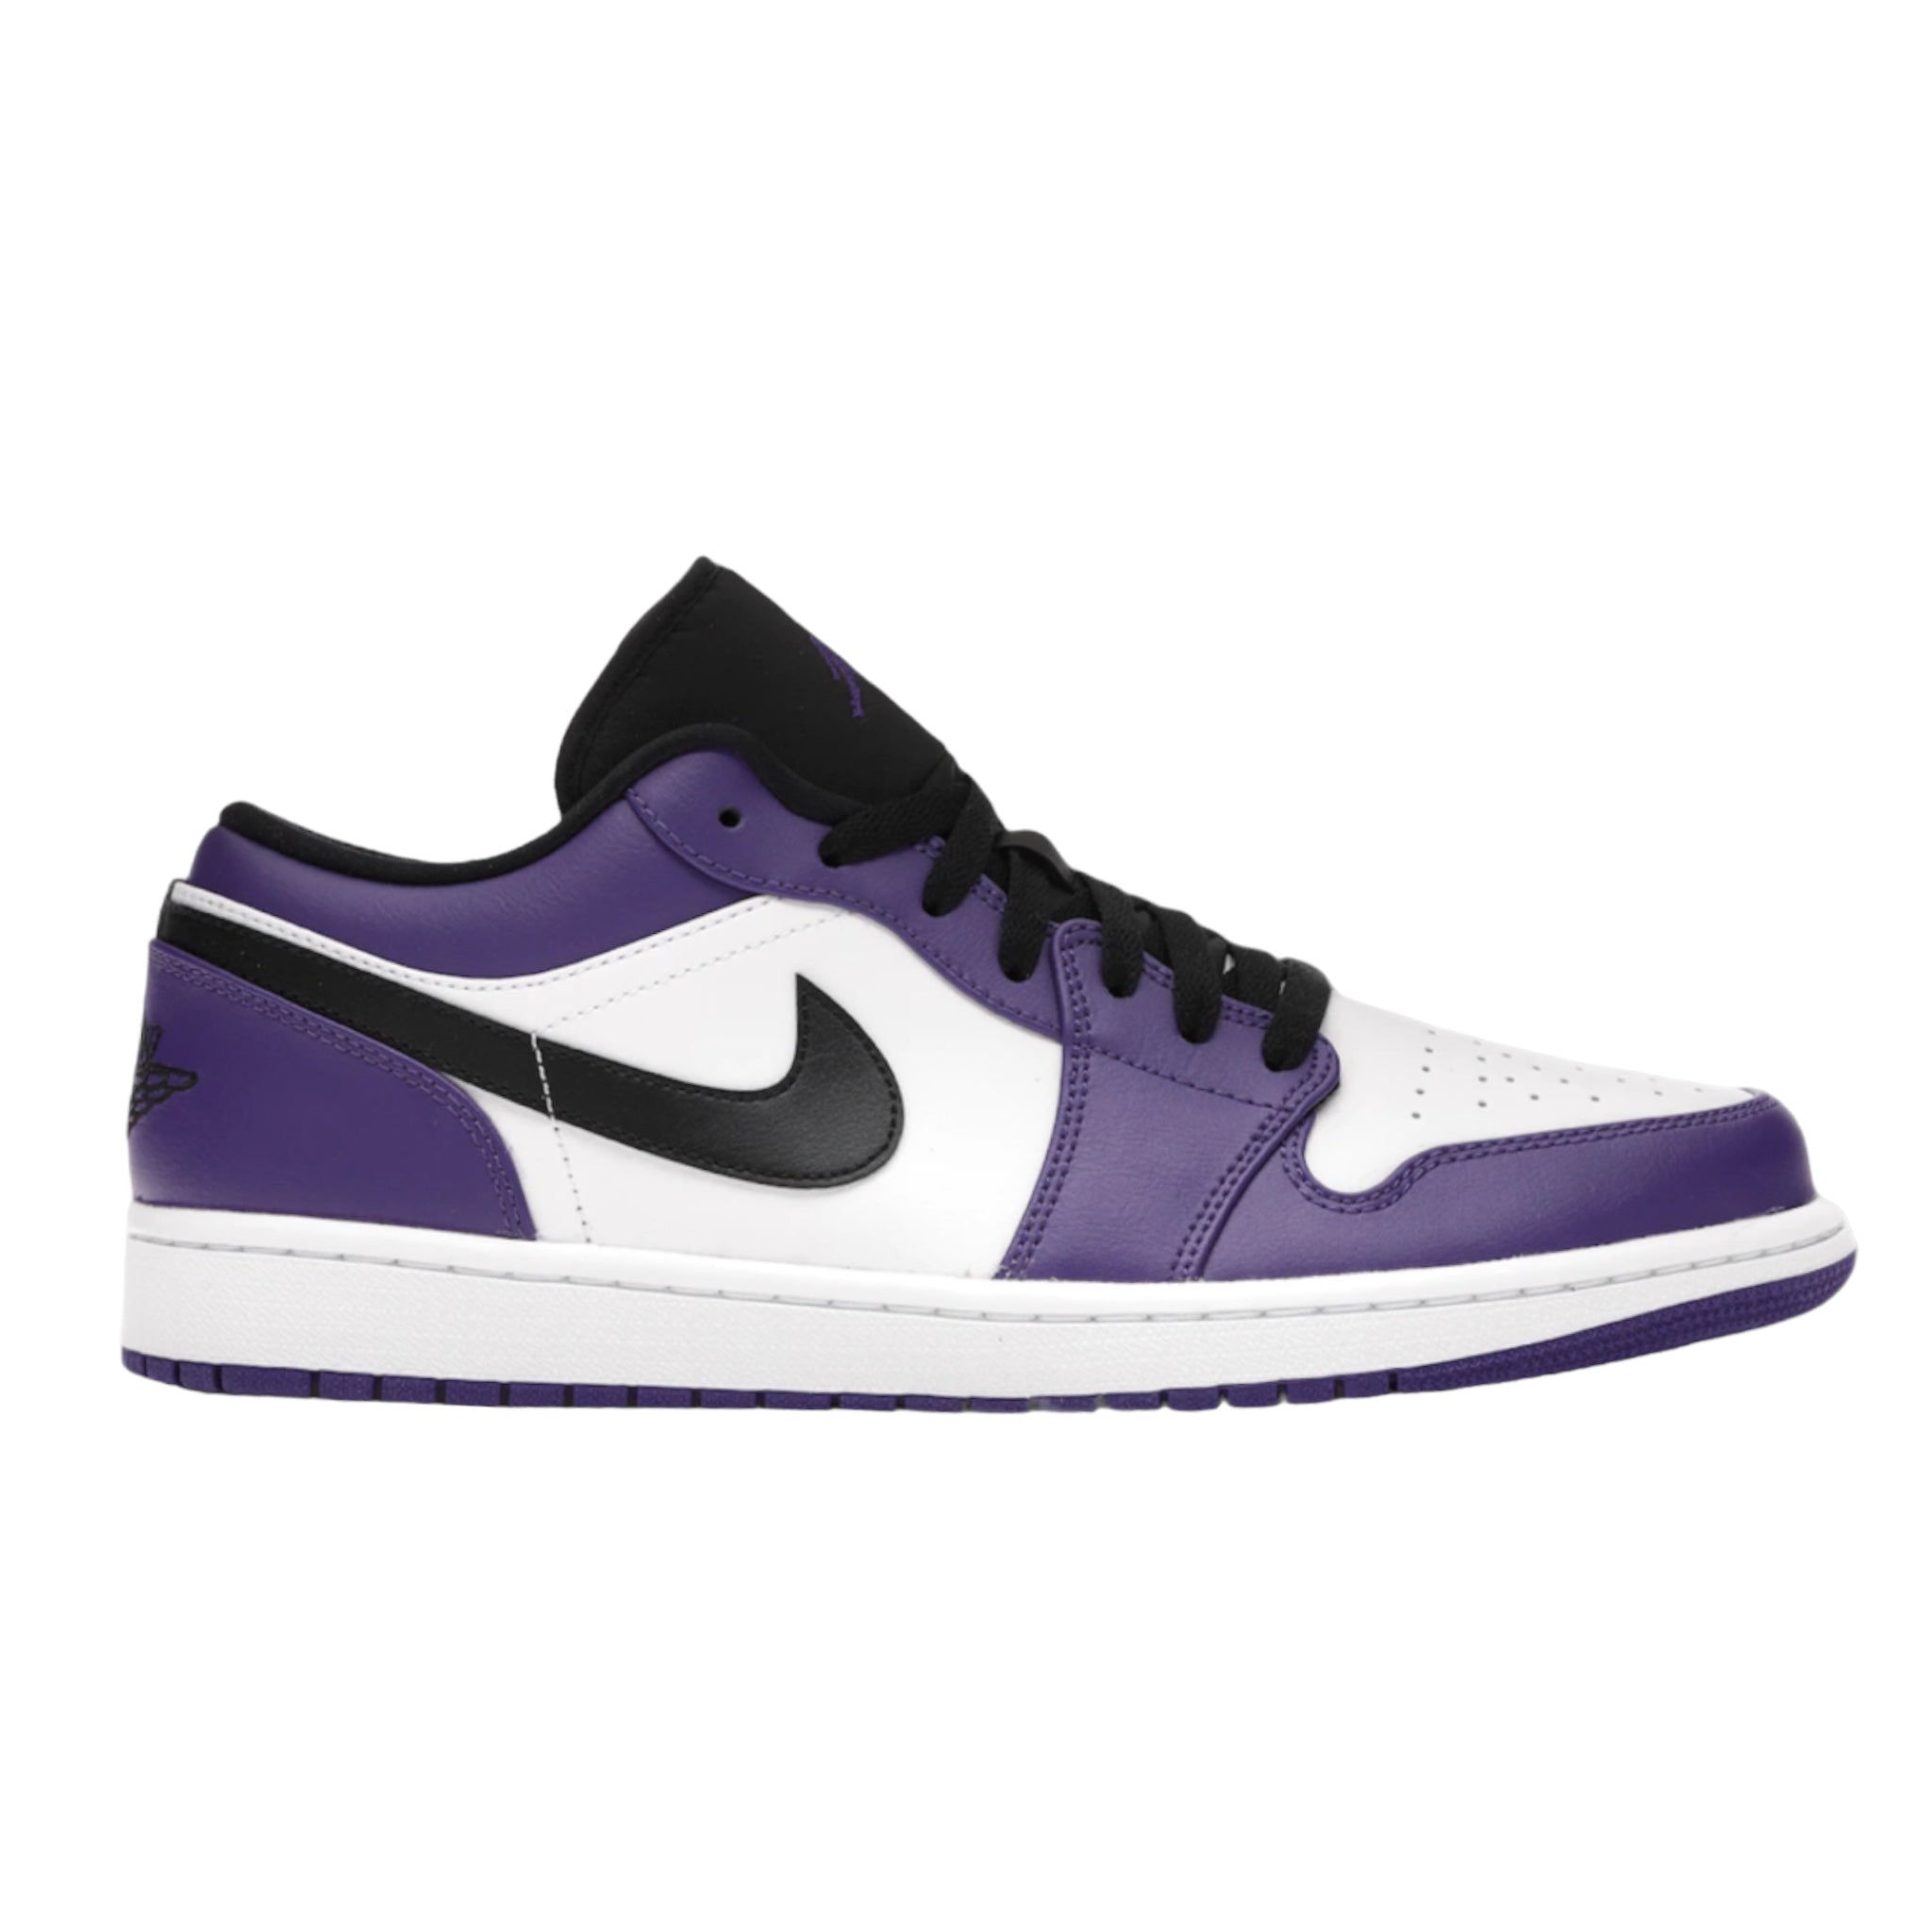 Jordan 1 Low Court Purple (Used)